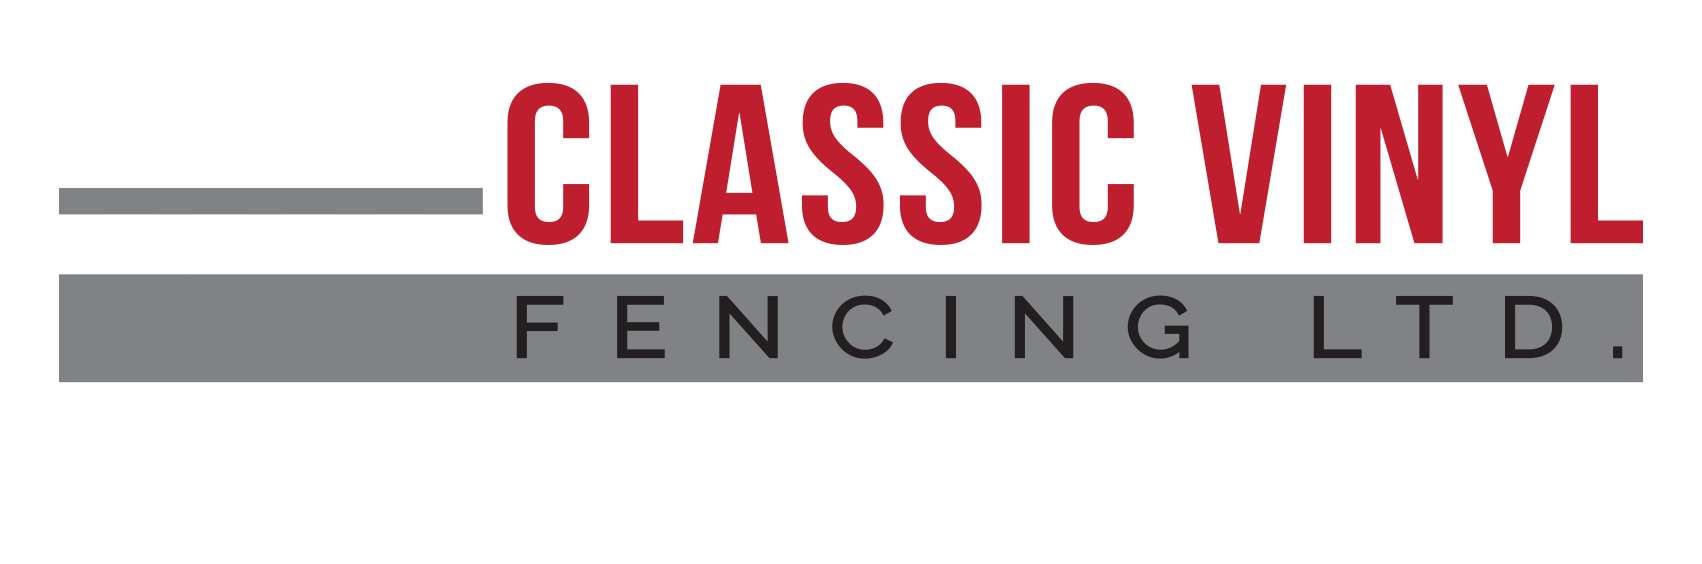 classic vinyl fencing logo